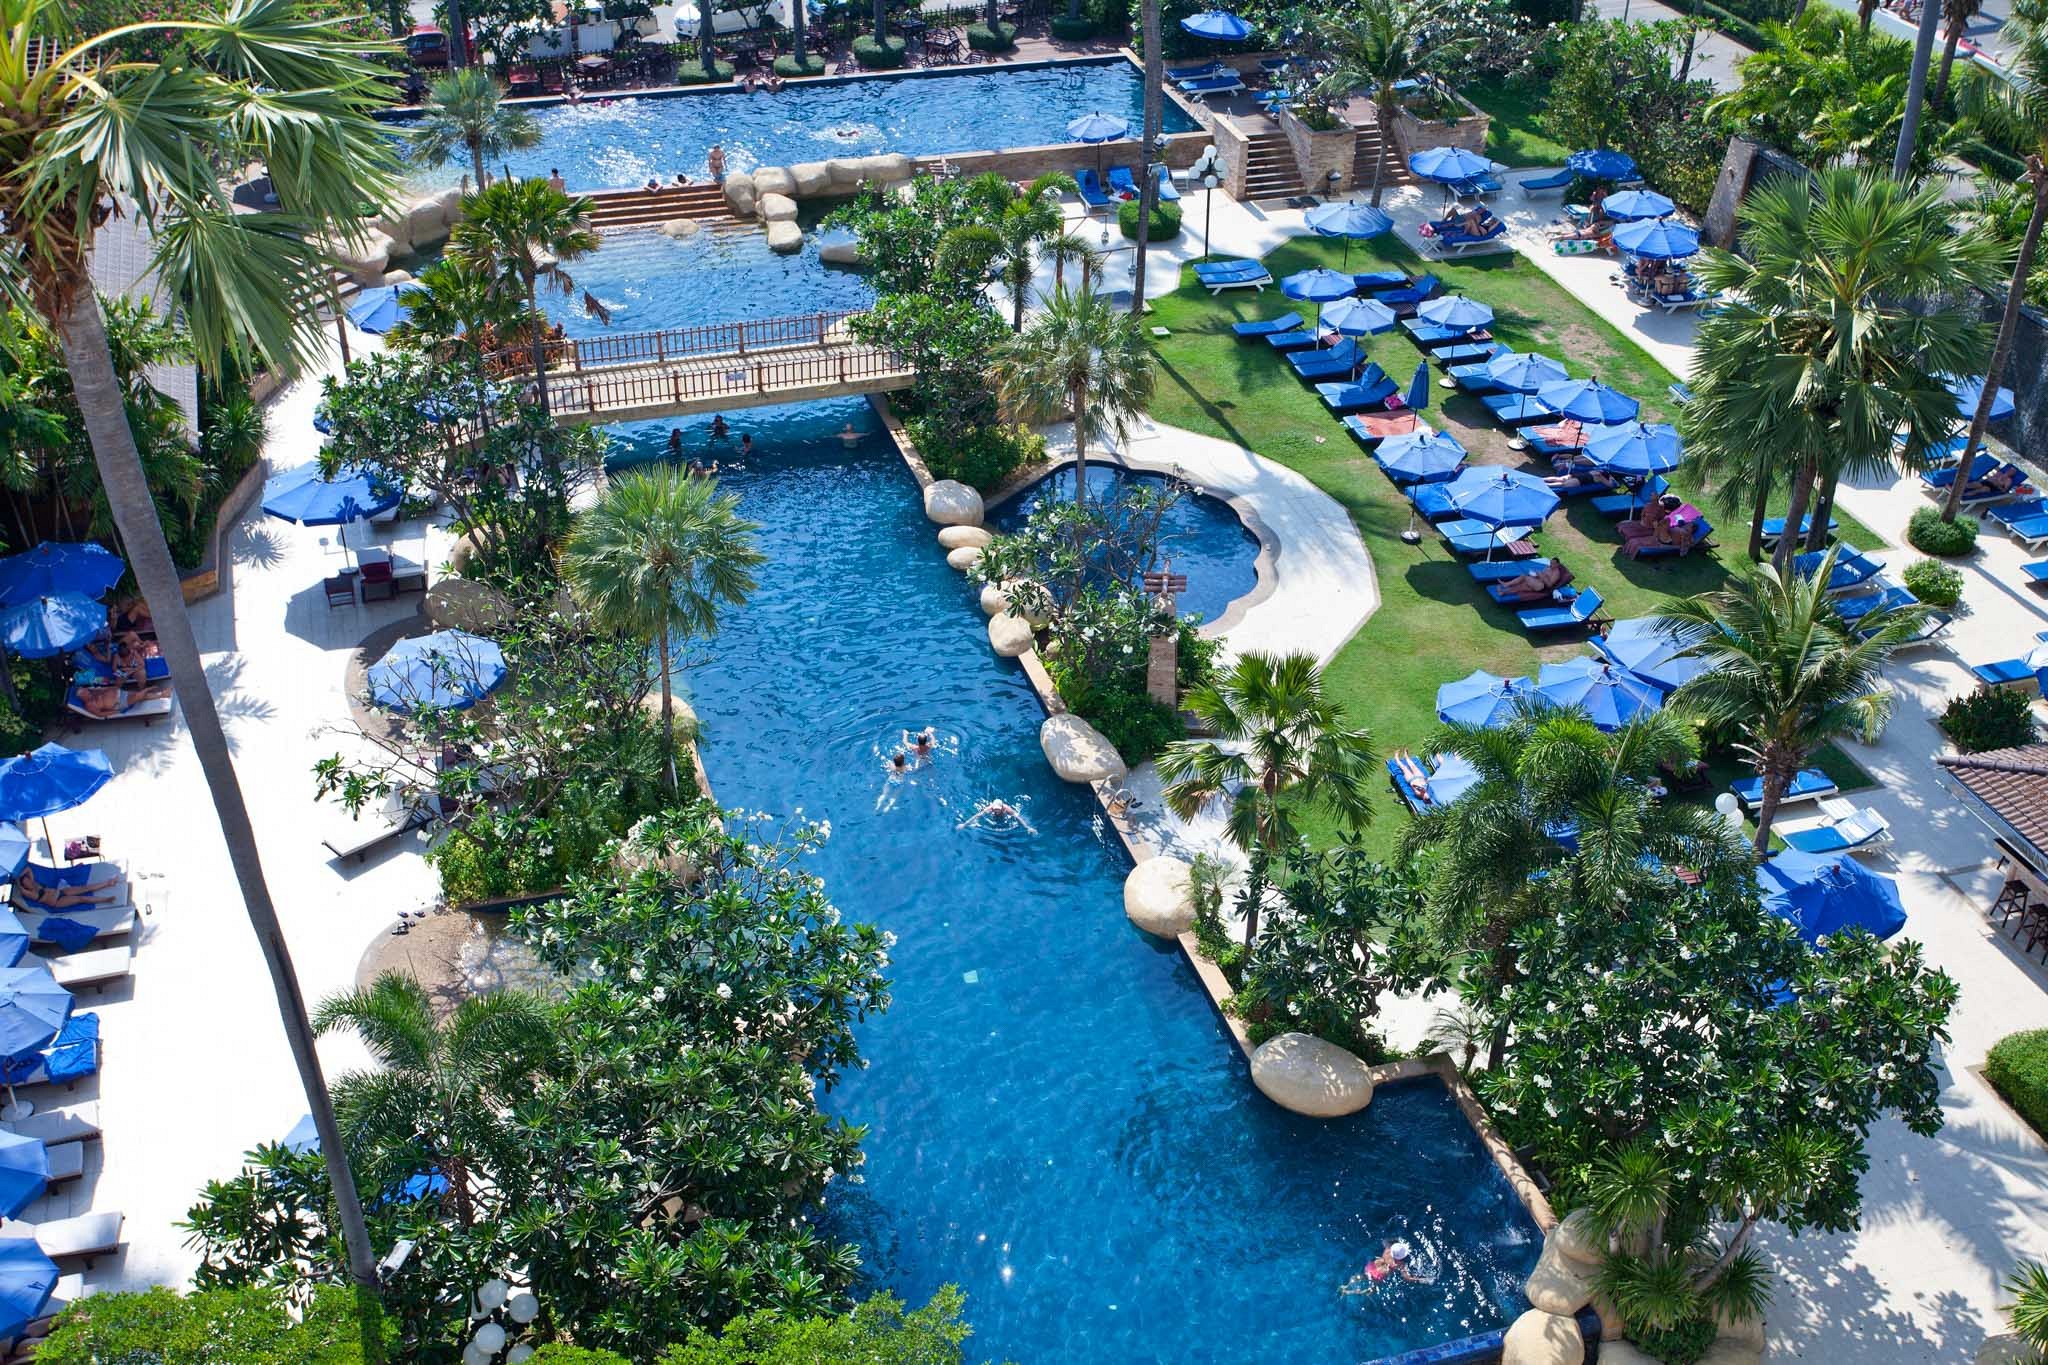 Jomtien Palm Beach Resort and Hotel